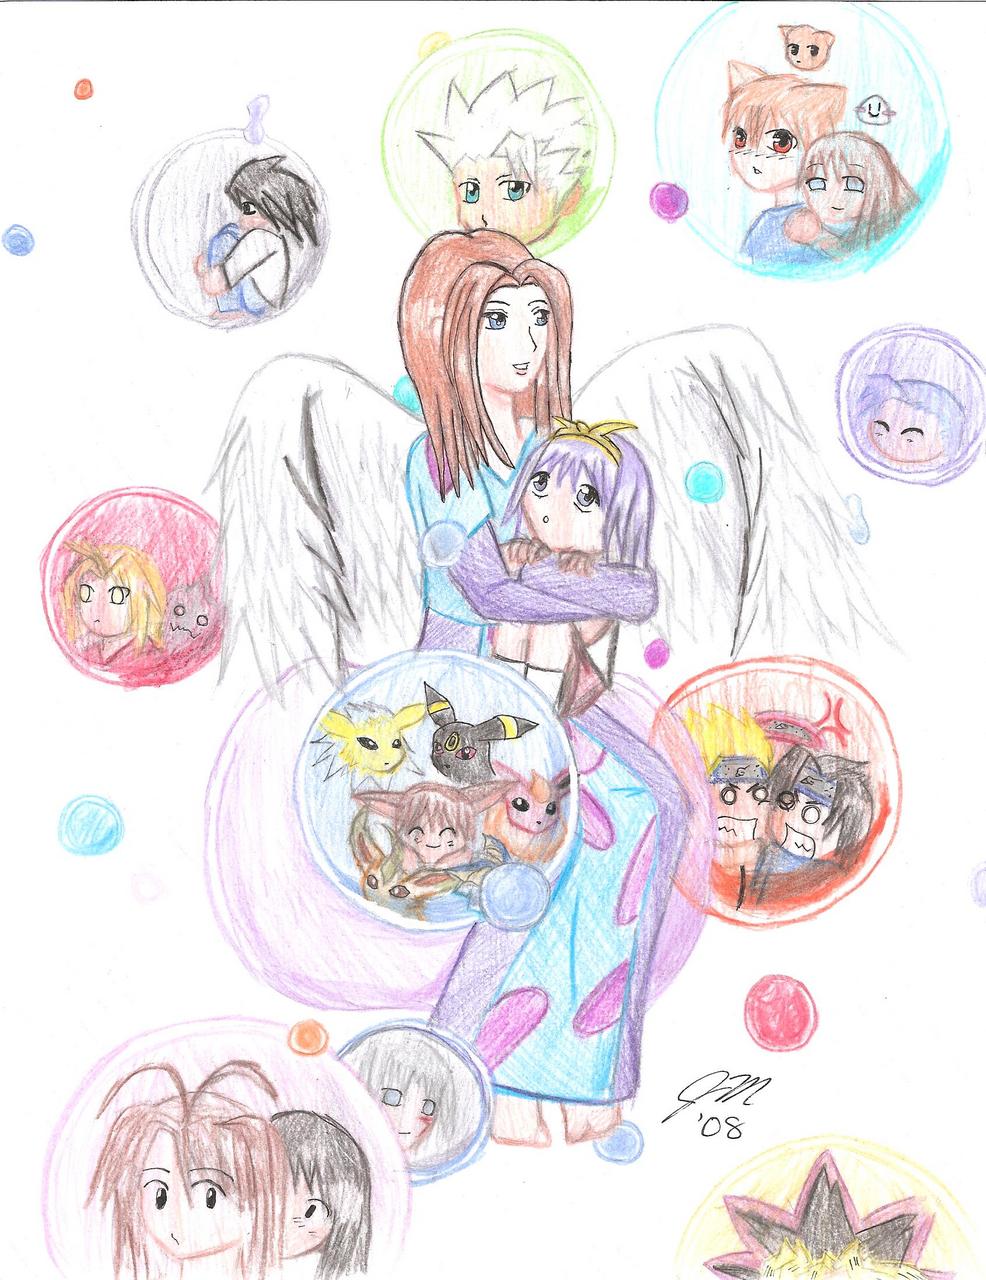 Anime Mother (Yotsuba's contest) by chichirifan92